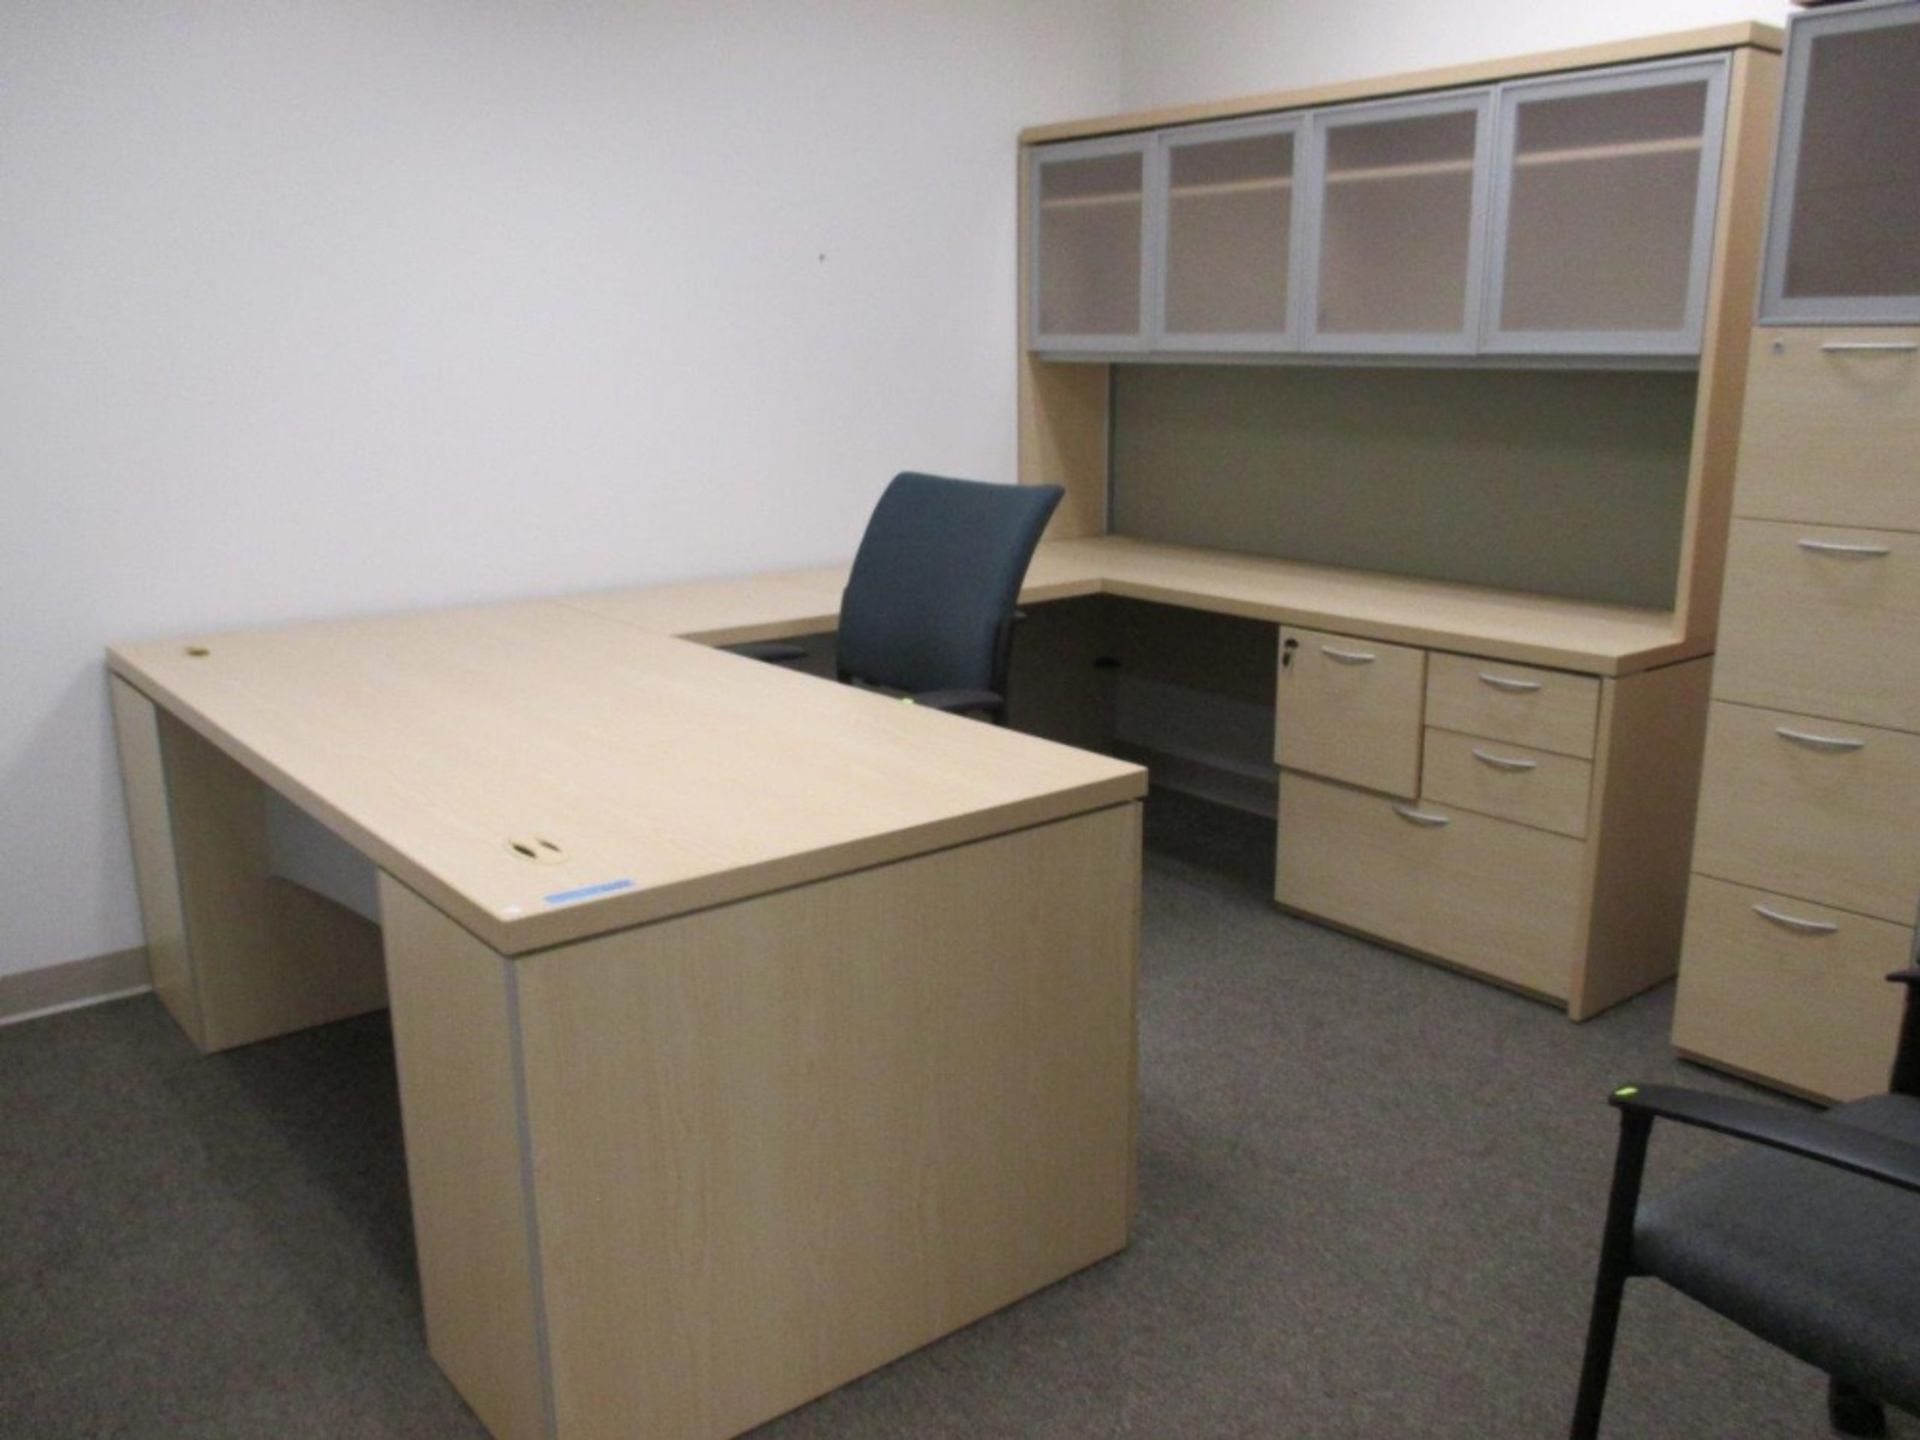 2008 Tecknion U Shaped Executive Desk - Image 2 of 2